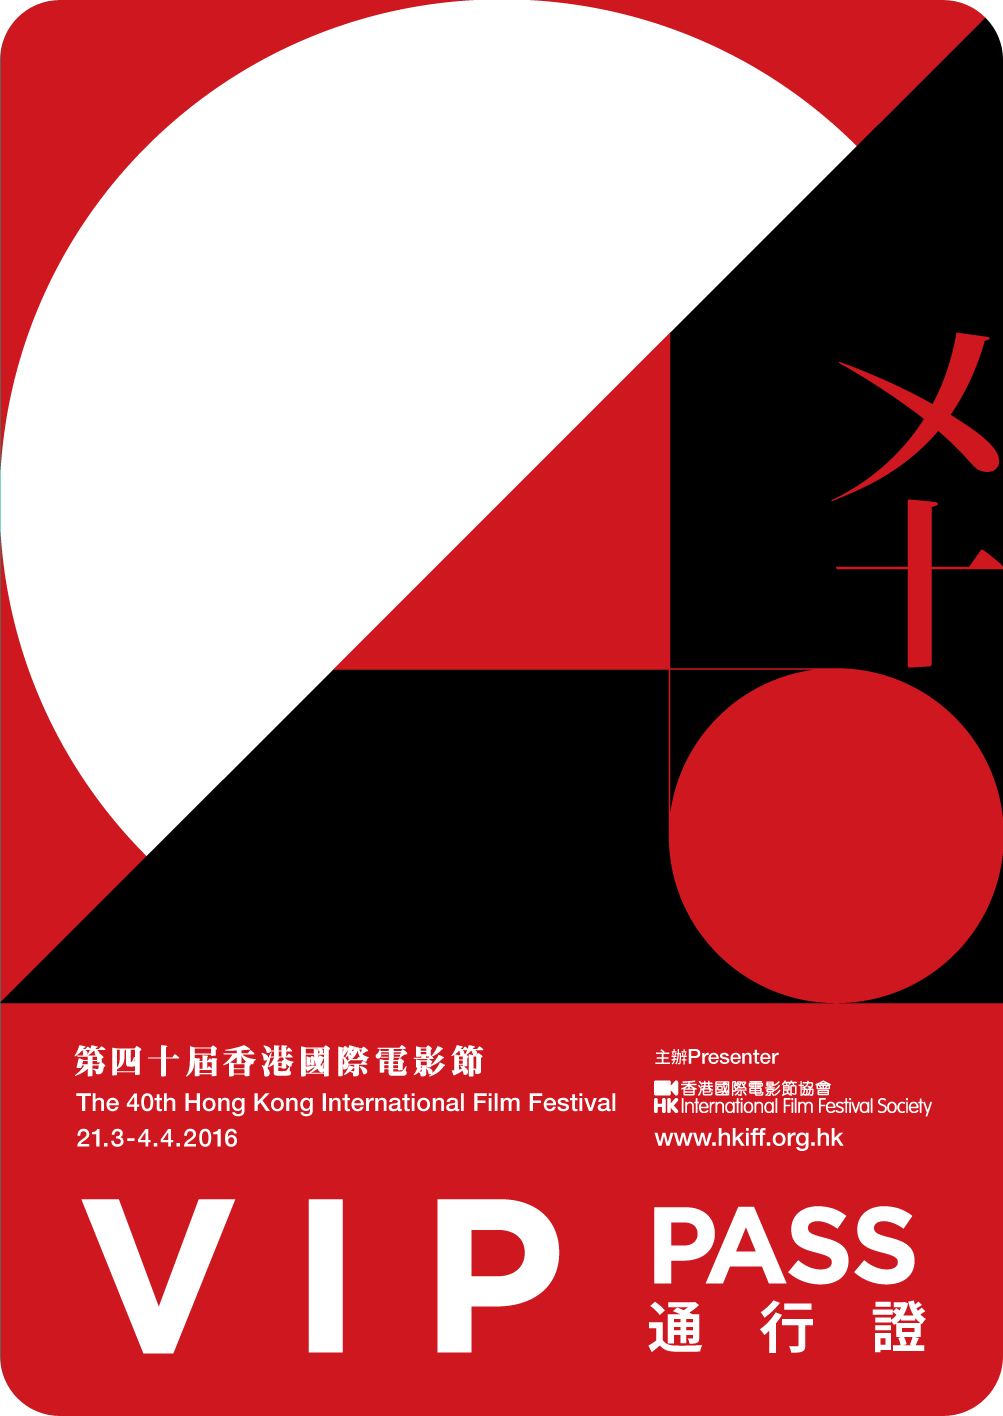 Hong Kong Premiere for Lao Shi